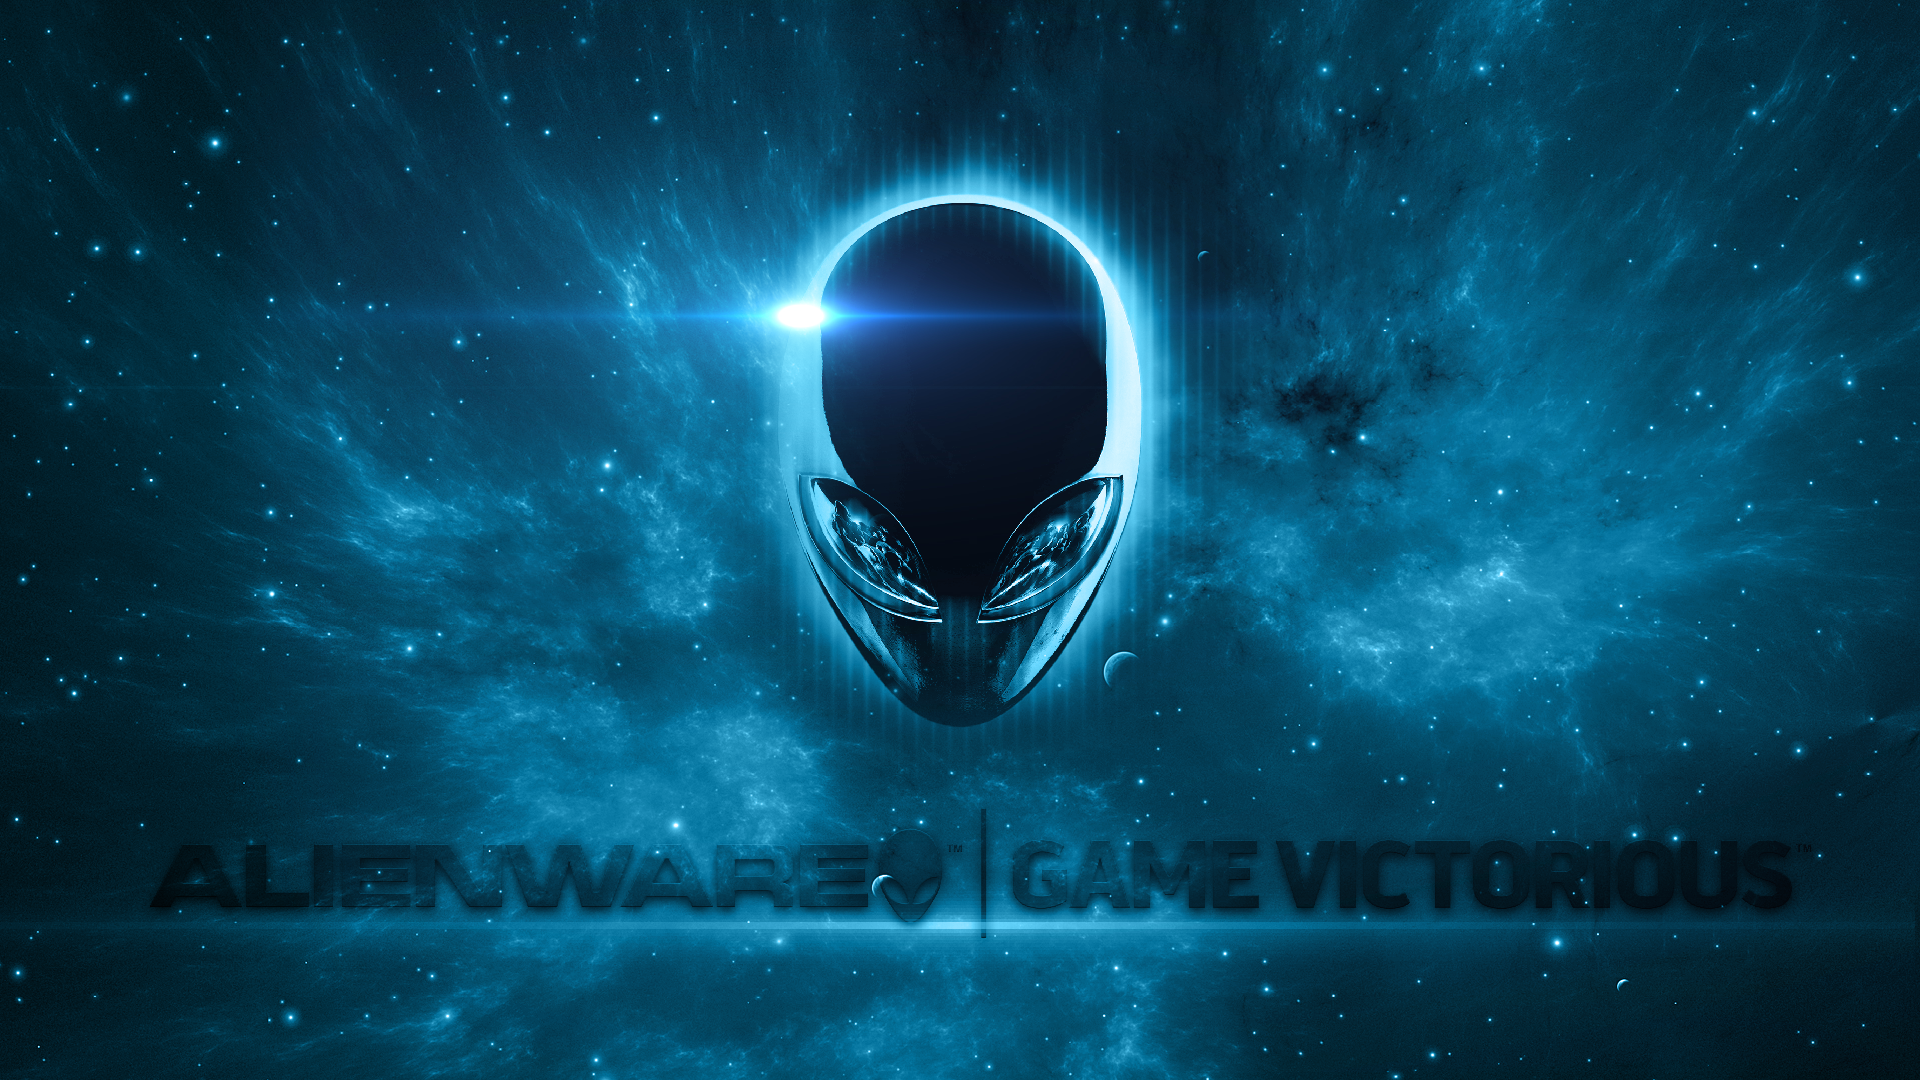 Blue Alienware Wallpaper